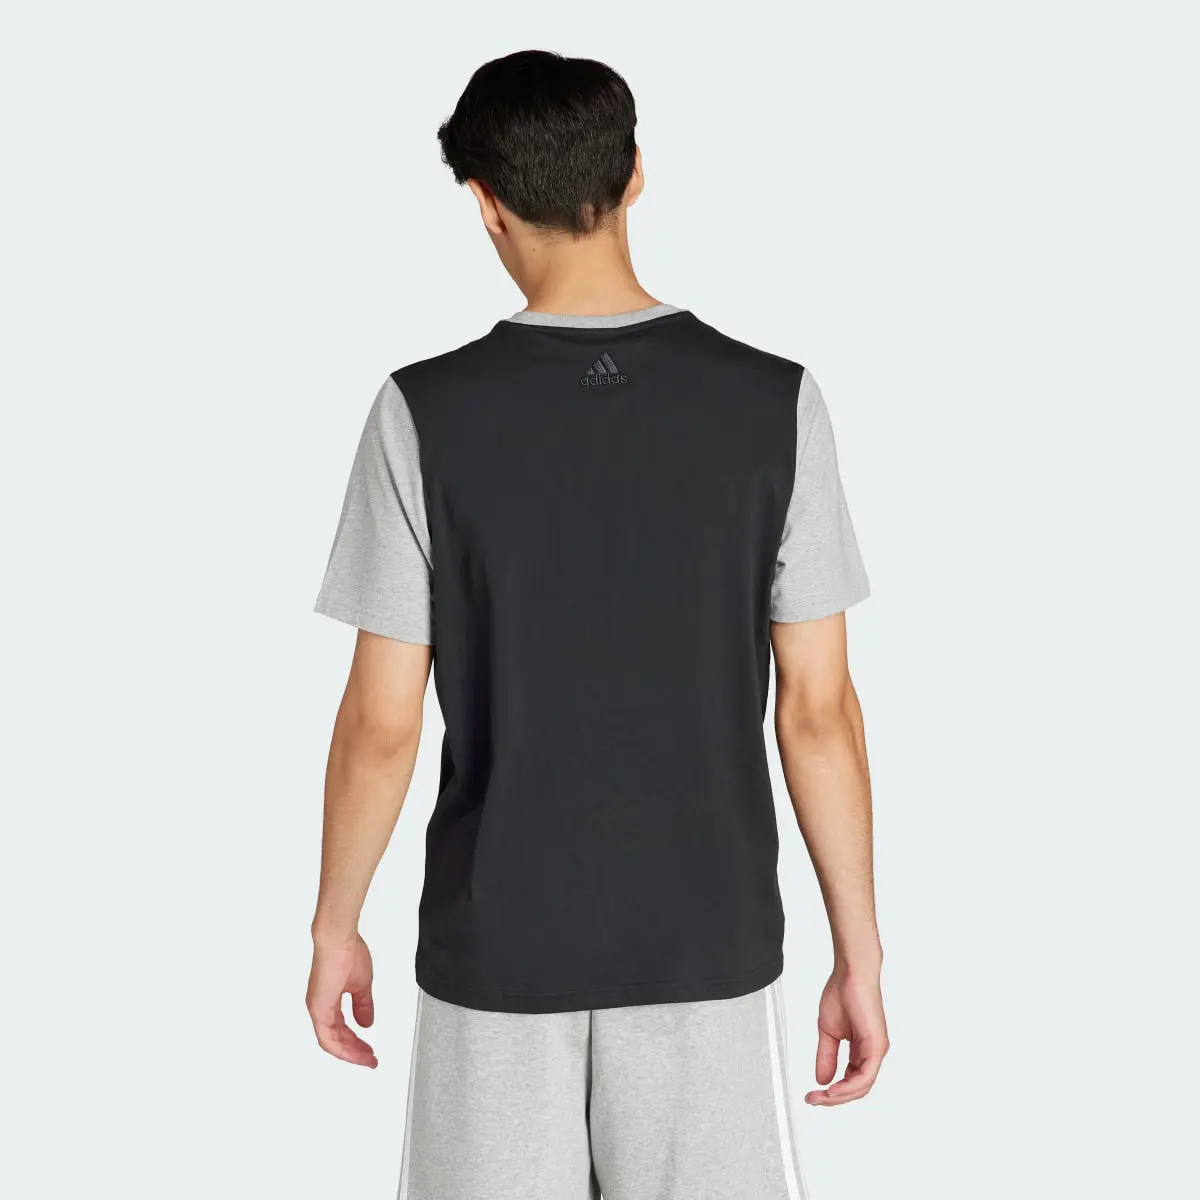 Adidas T-shirt Essentials Single Jersey Big Logo. 3